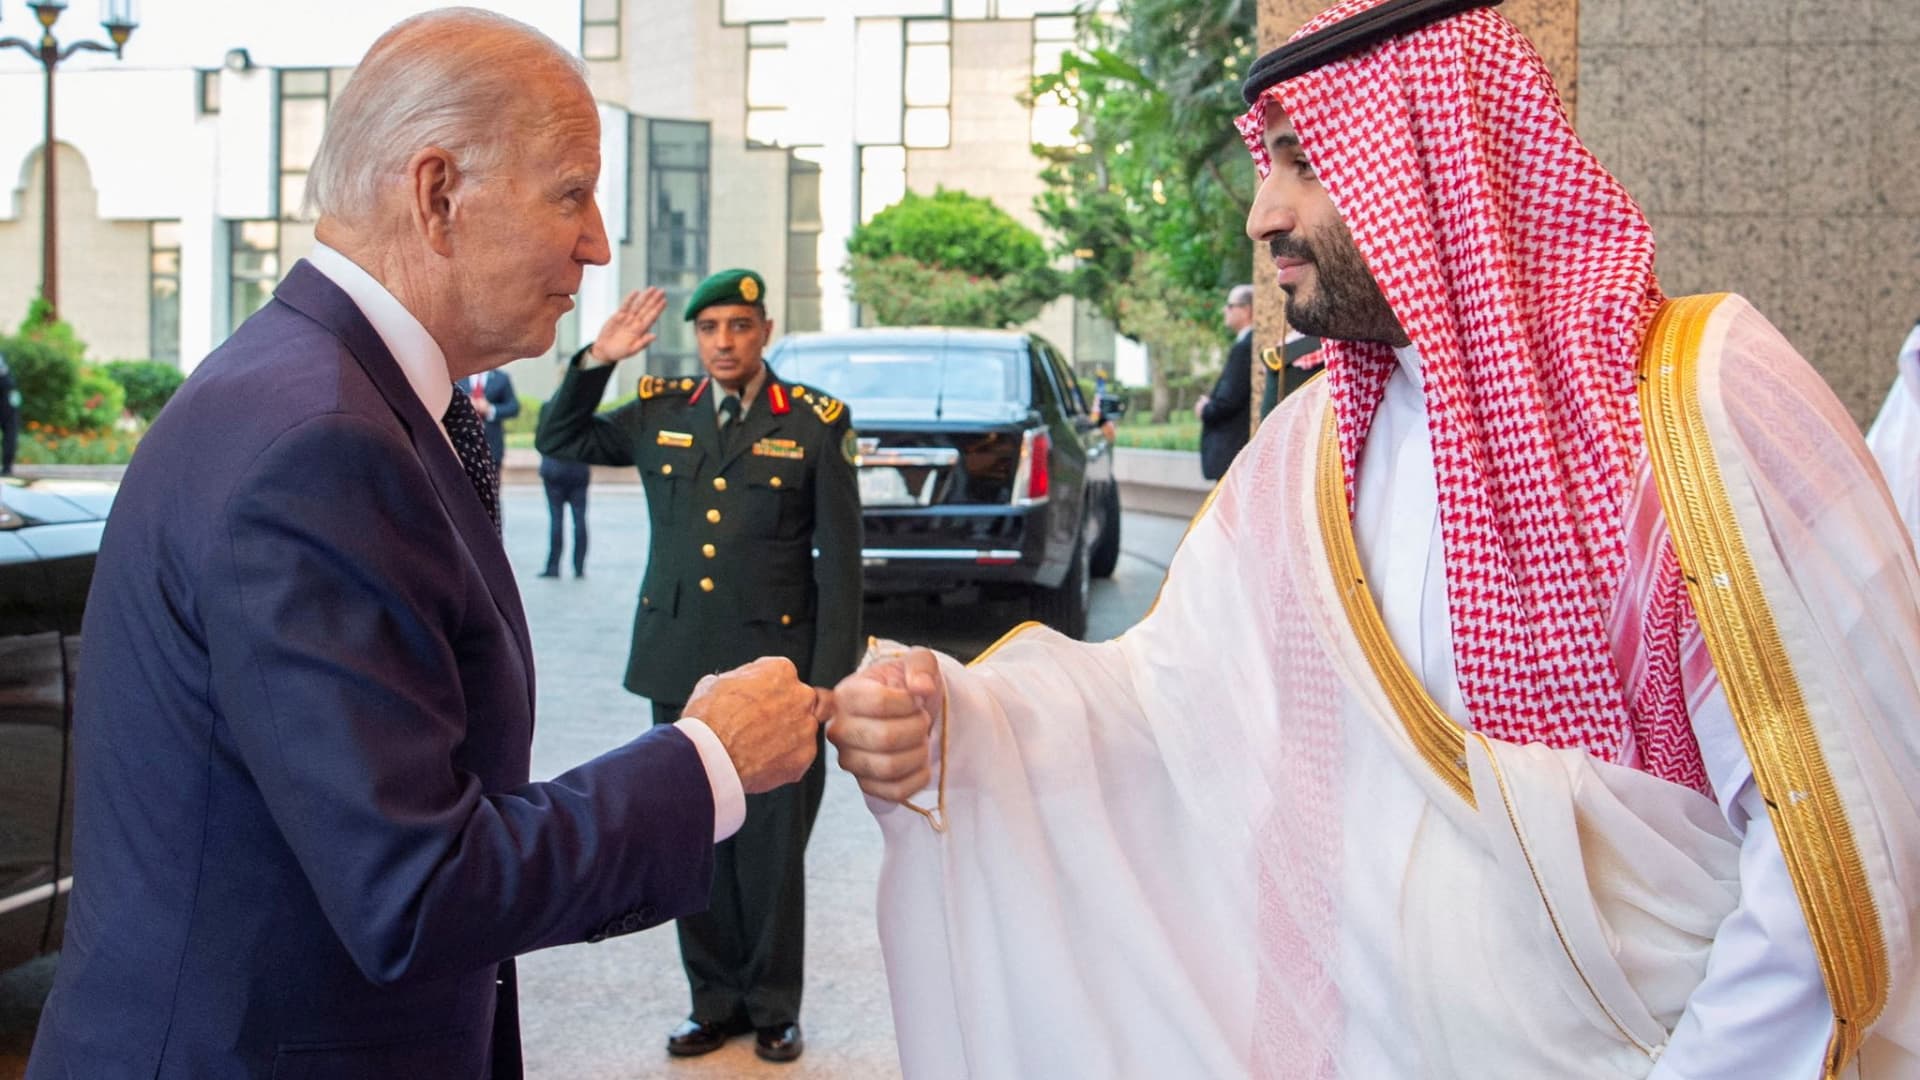 Biden fist bumps Saudi Prince MBS after condemning Jamal Khashoggi killing